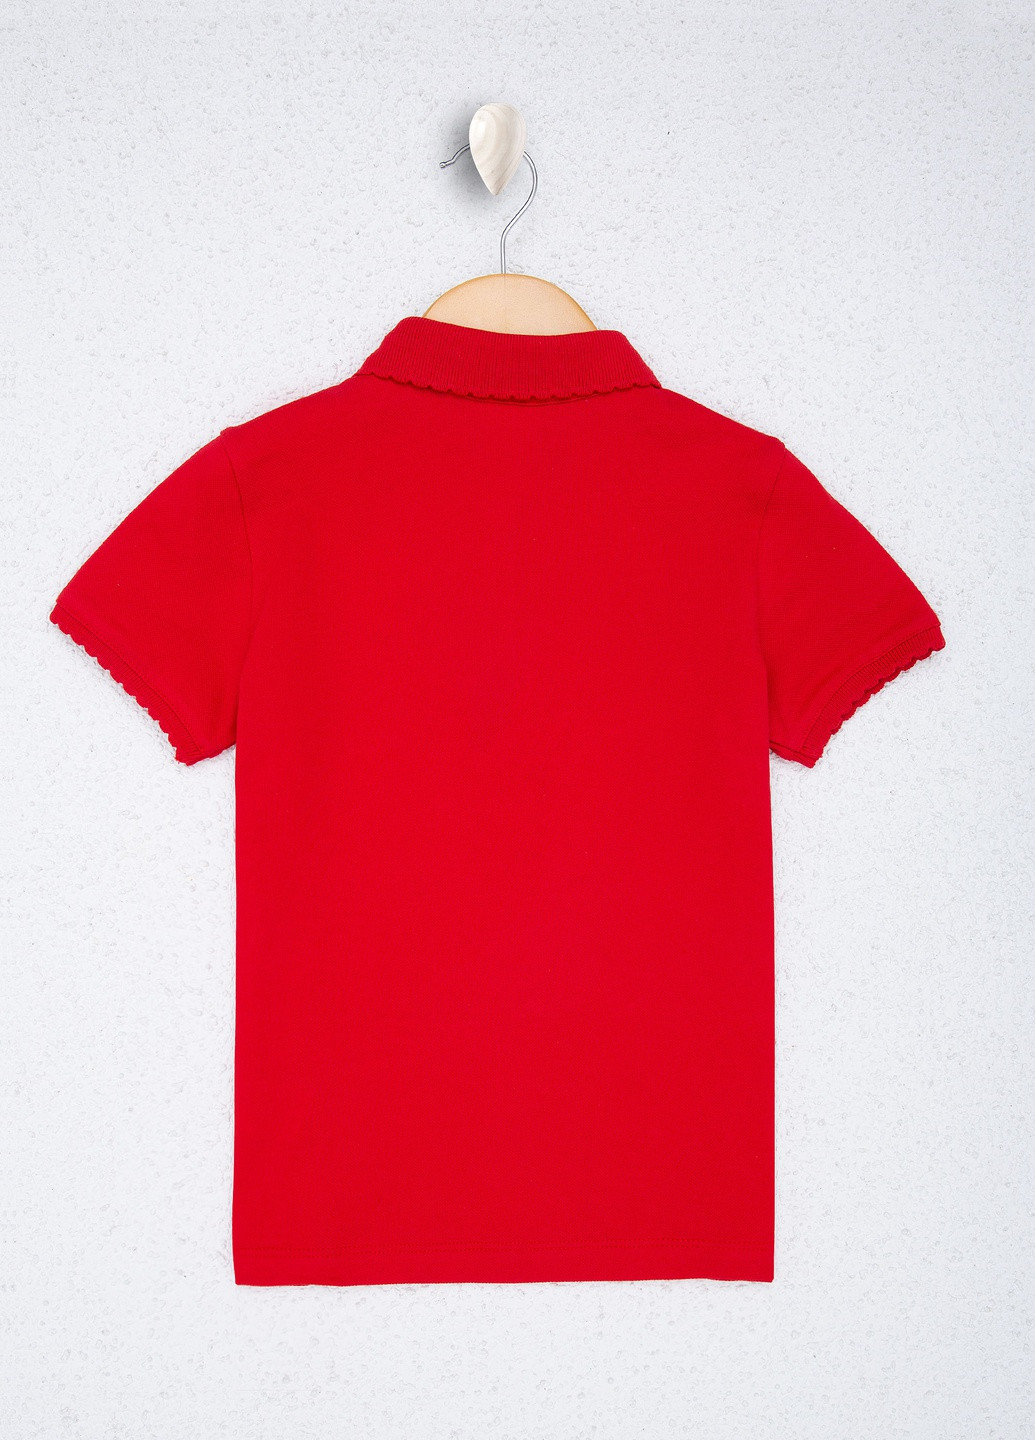 Красная детская футболка-футболка u.s/ polo assn. на девочку для девочки U.S. Polo Assn.